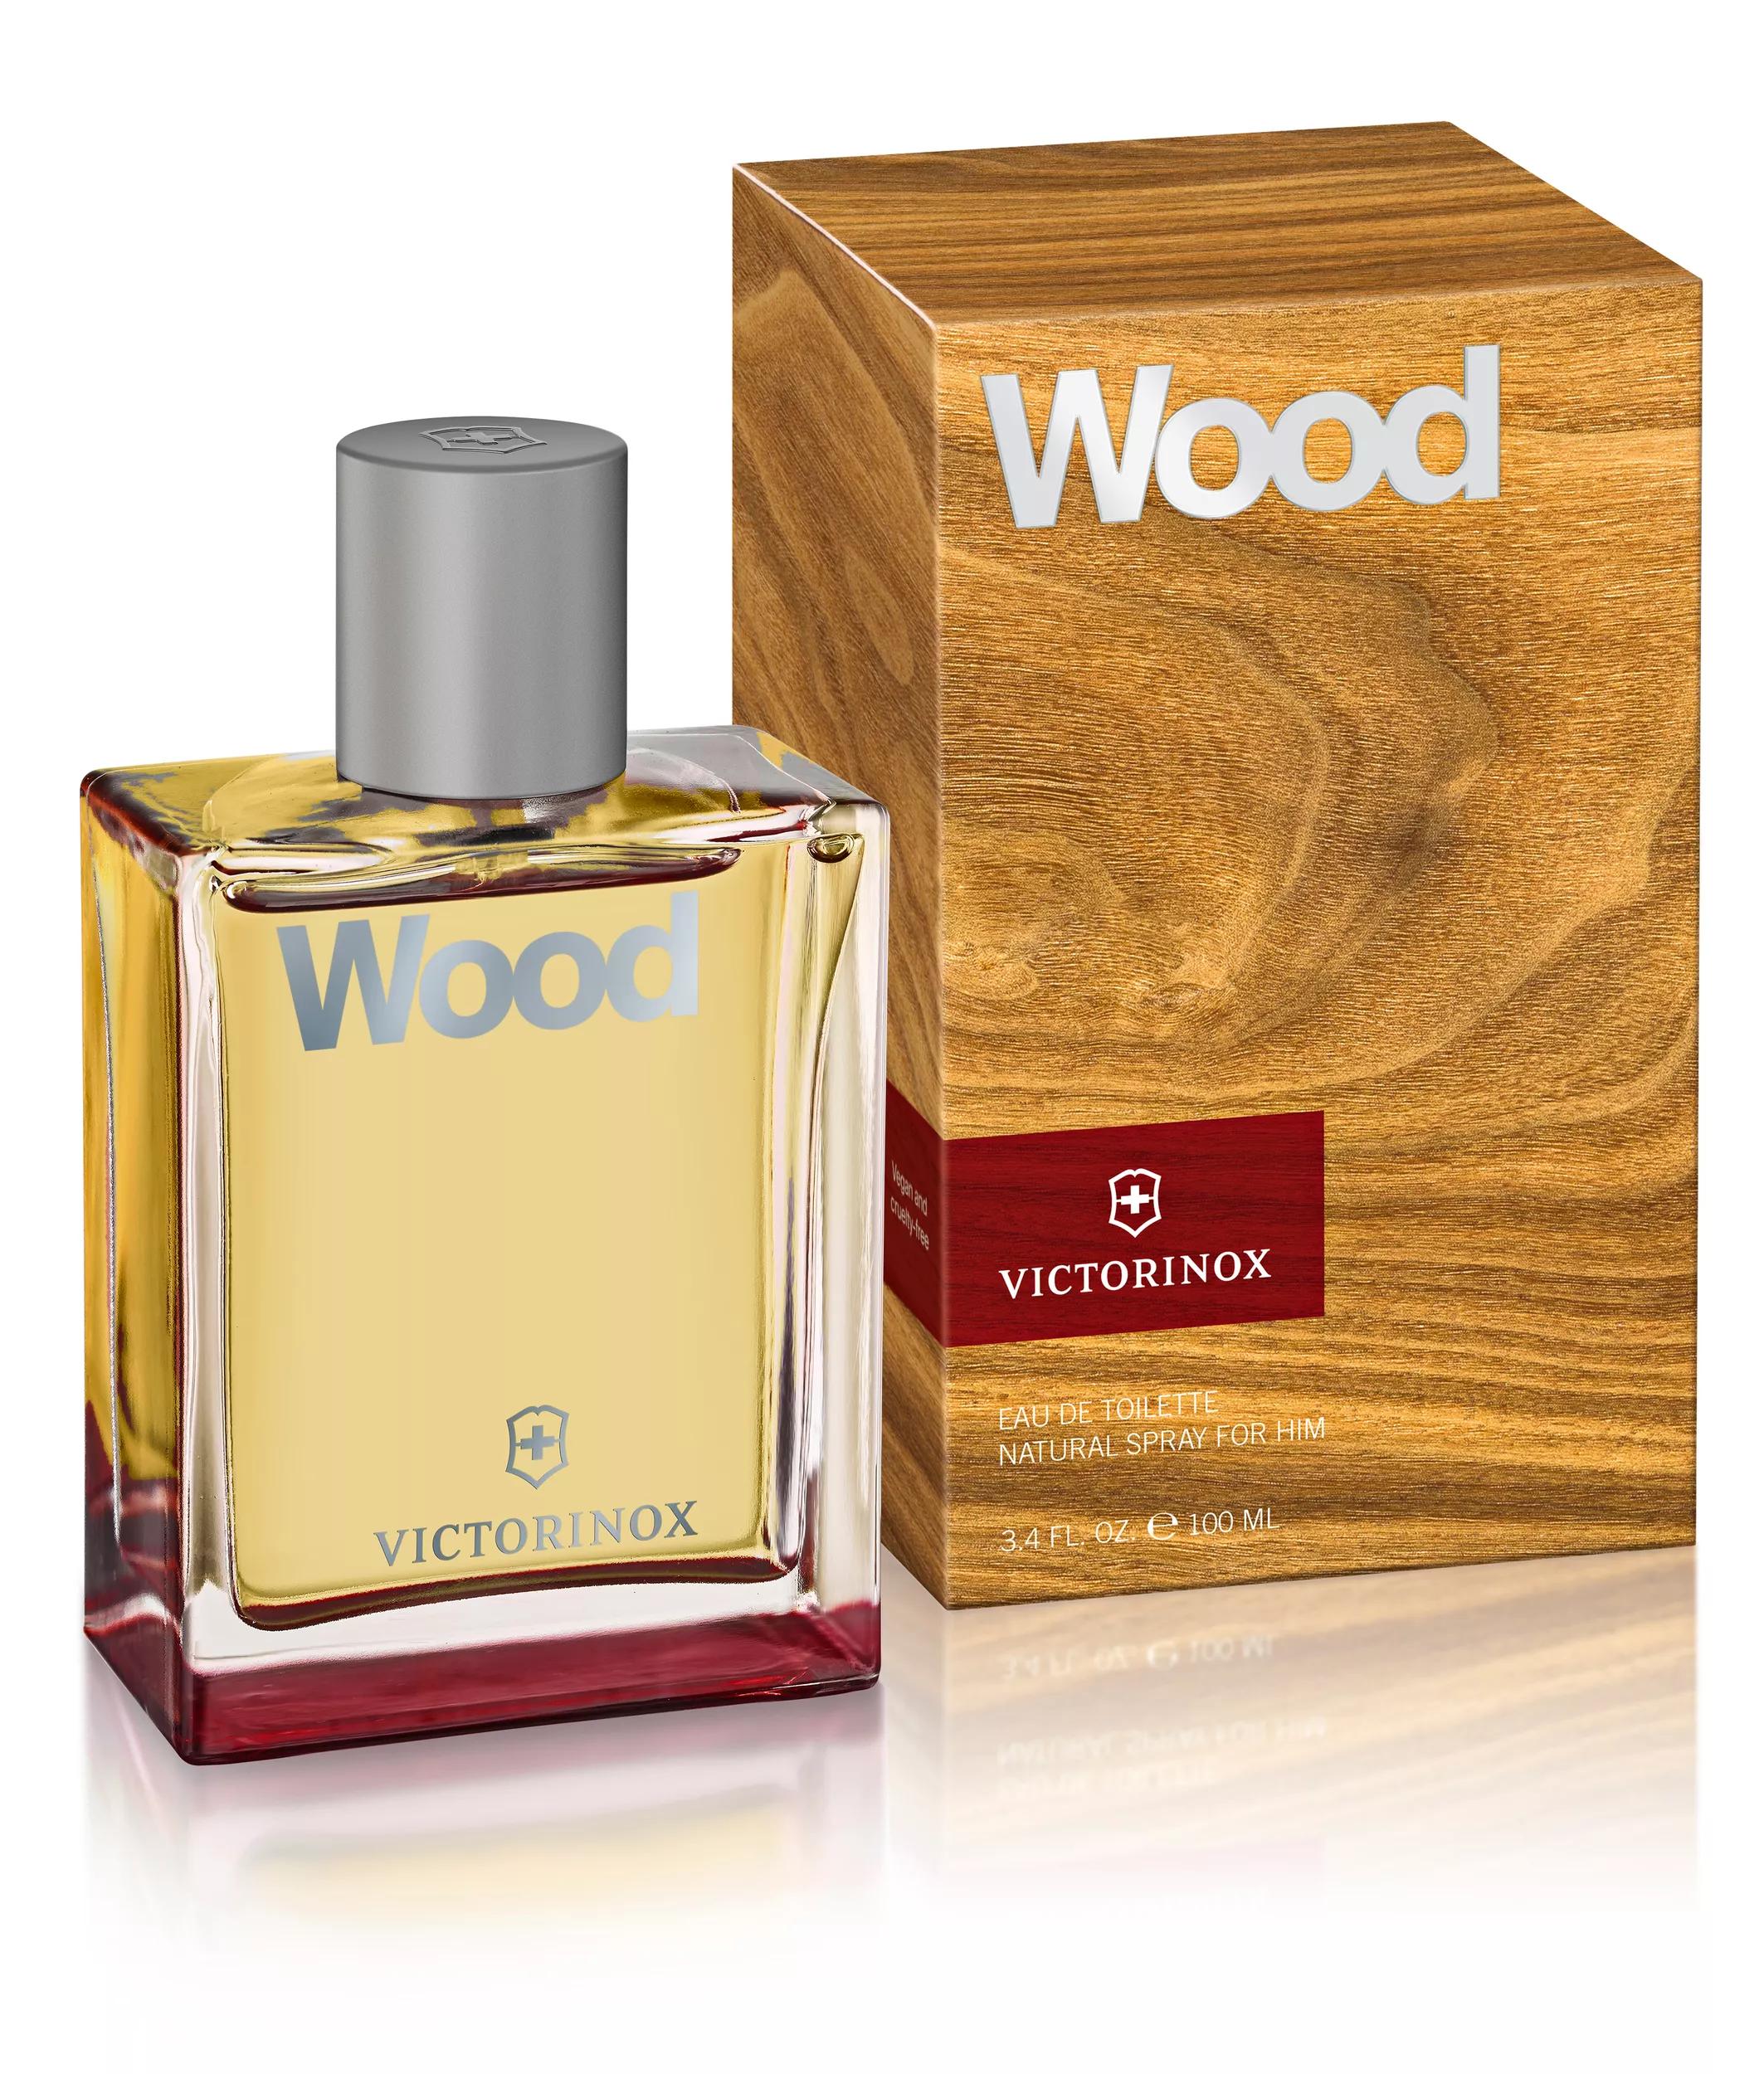 Victorinox Wood: Reconectarse de manera natural